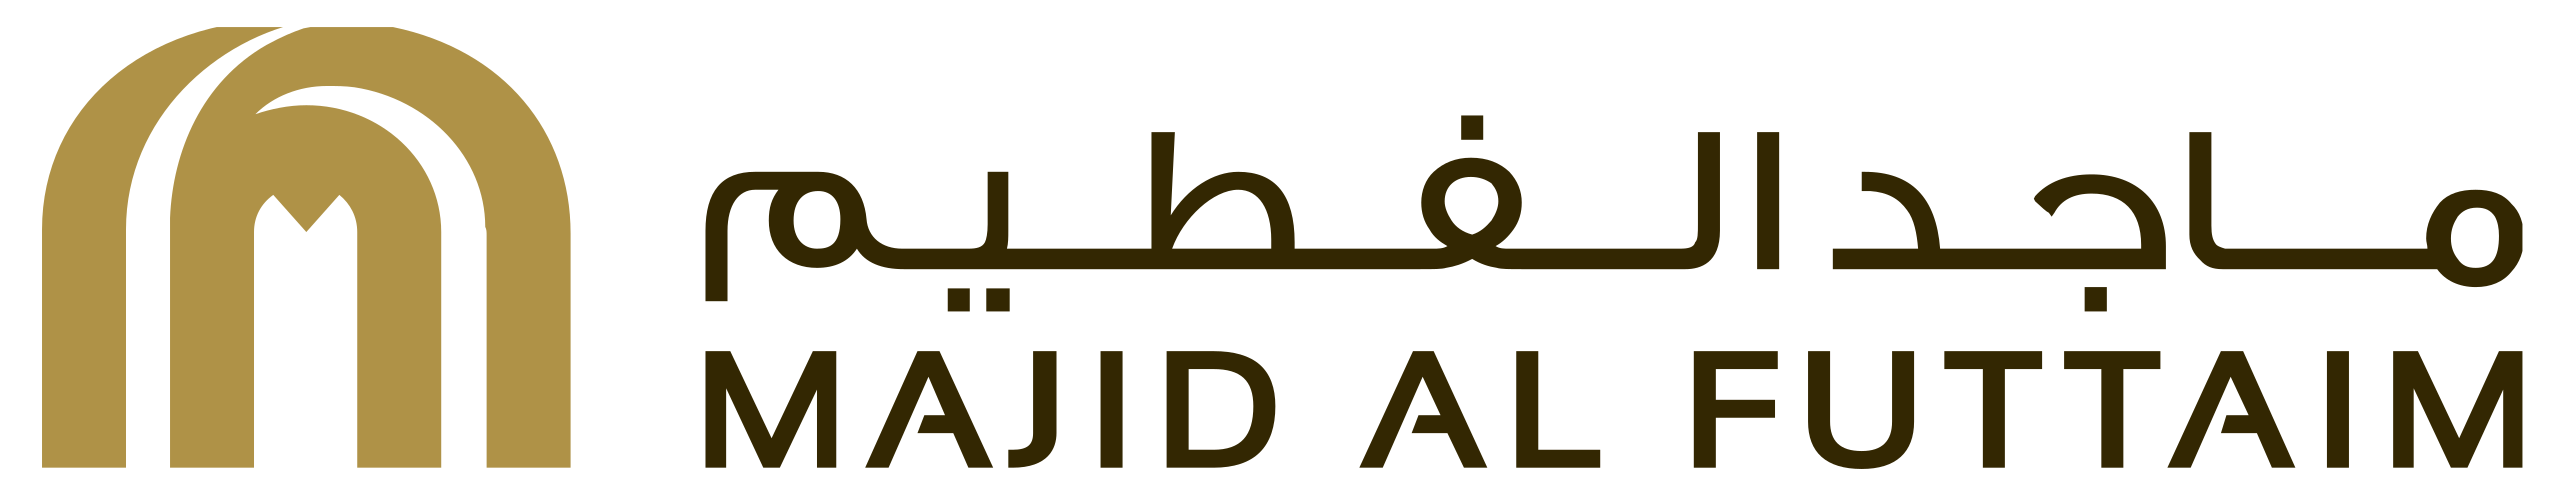 Majid Al Futtaim Logo